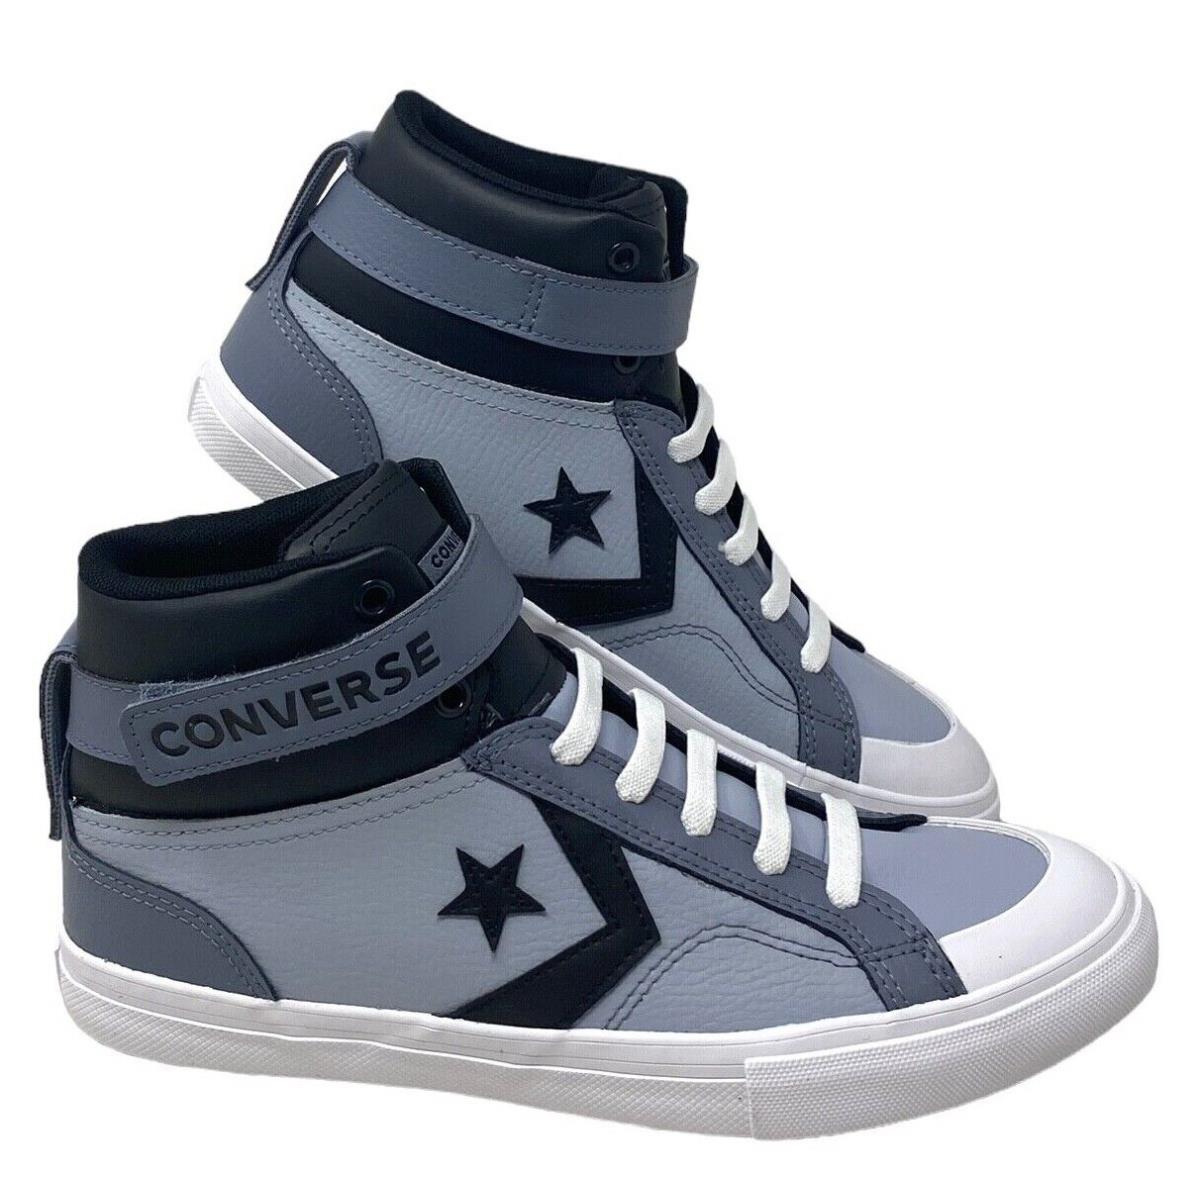 Converse Pro Blaze Strap Leather Mid Top Gray Sneaker Kids Women`s Shoes A05708C